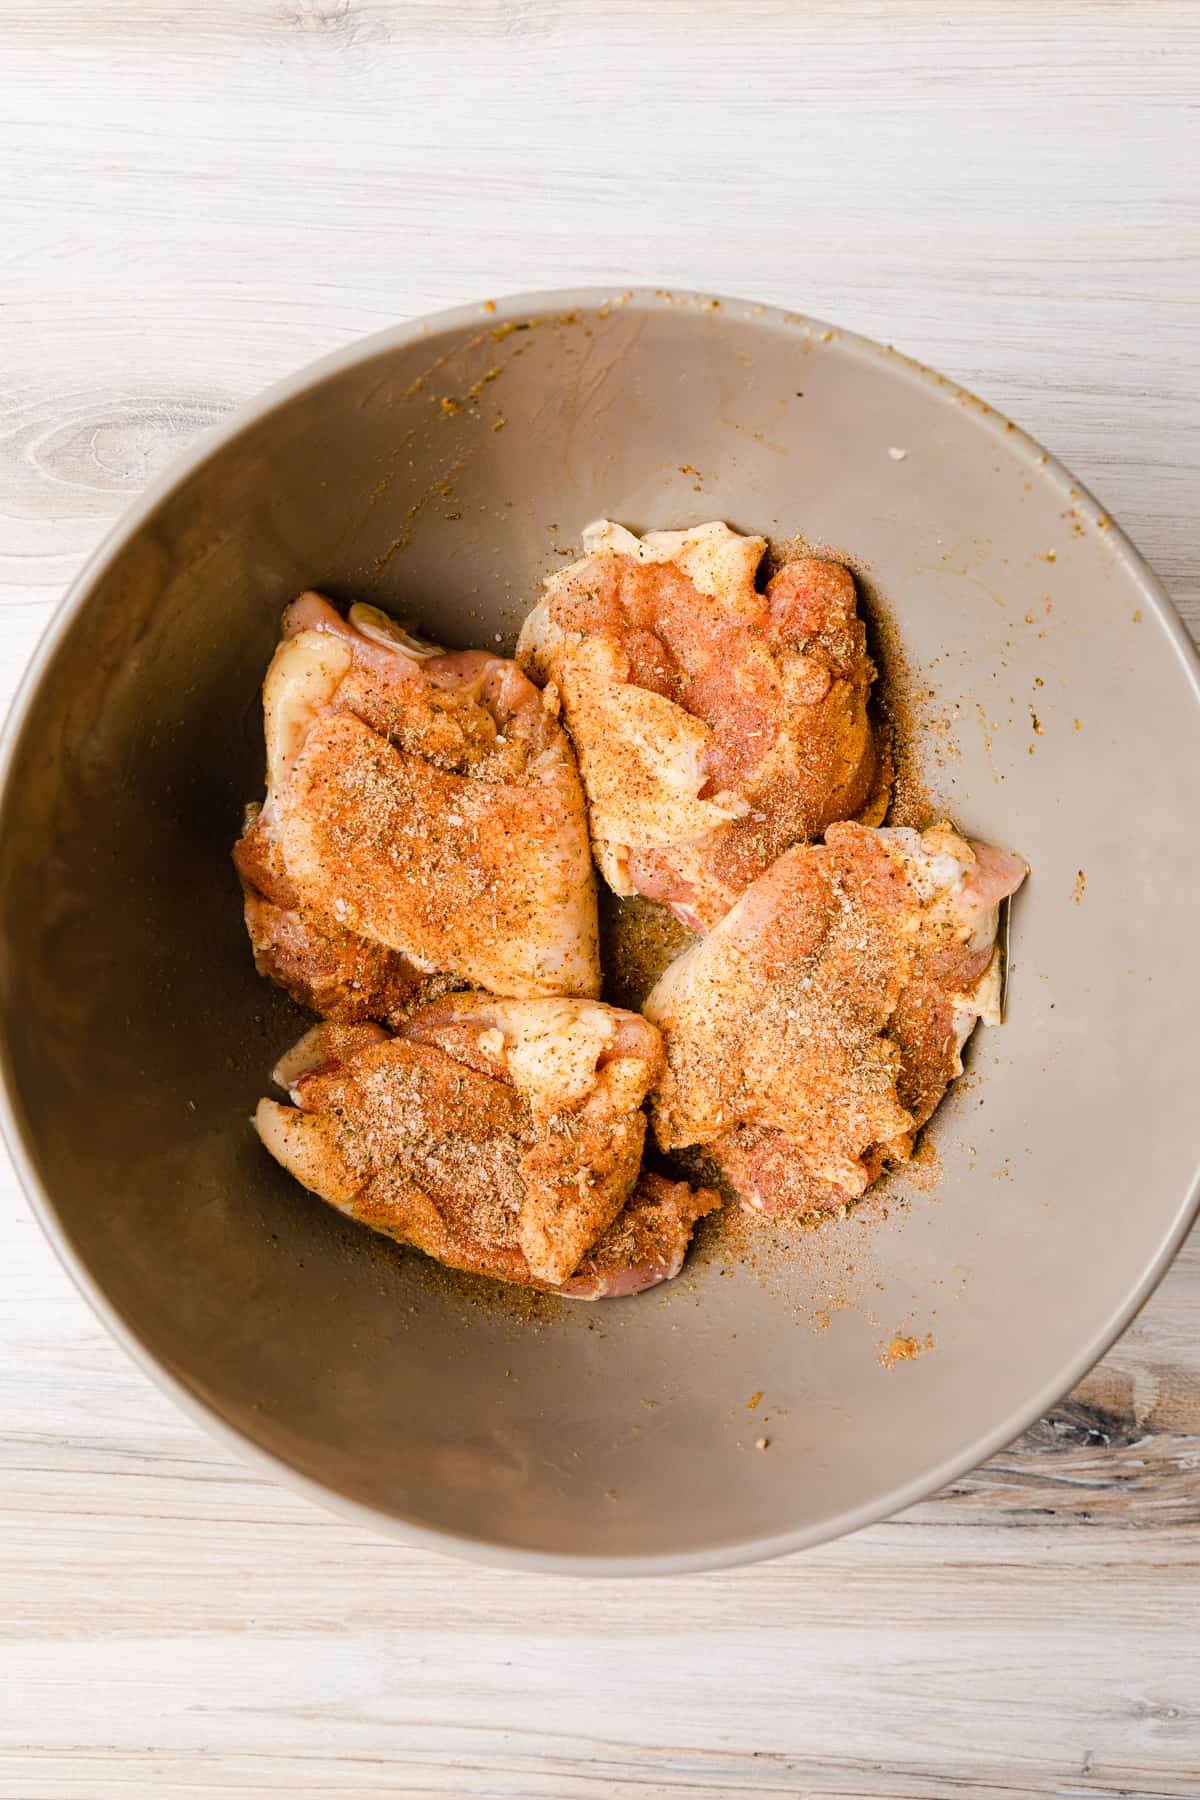 Making the recipe by seasoning chicken.